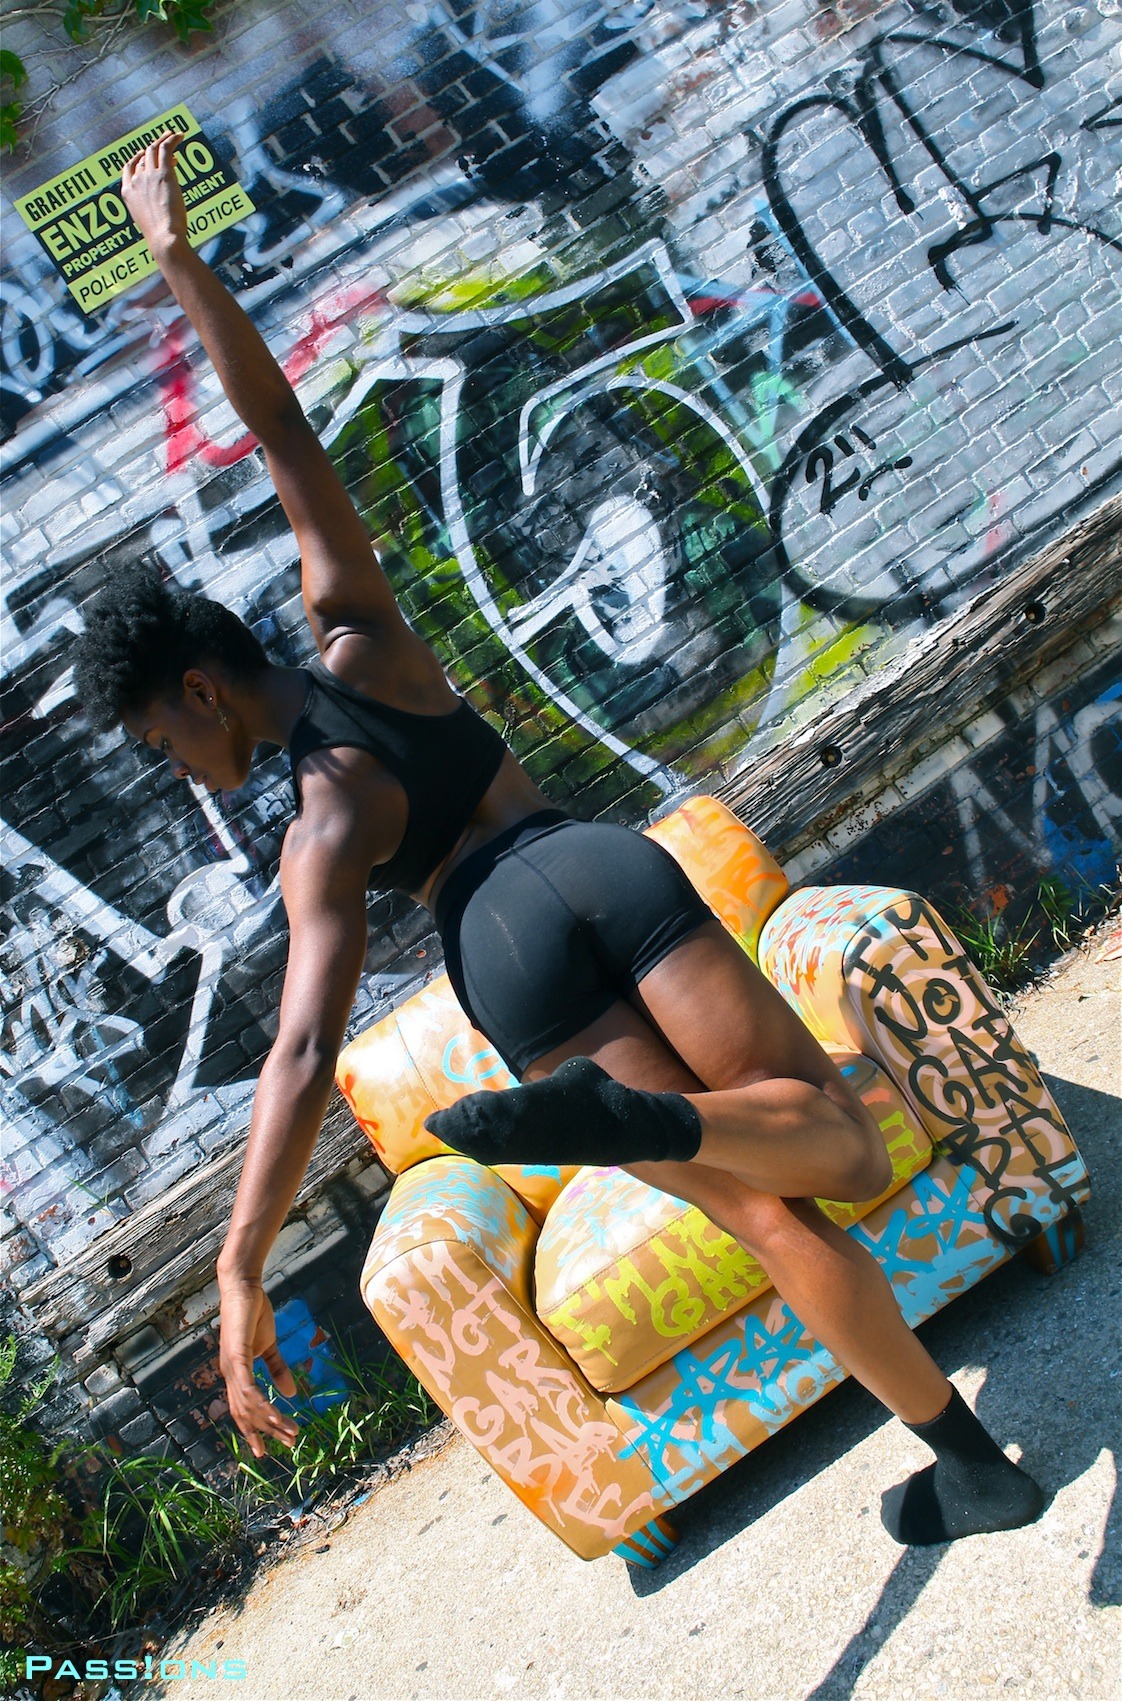 passions-ink:  Jessica Pinkett | Art of Dance | NYC 2014 I had a very creative shoot